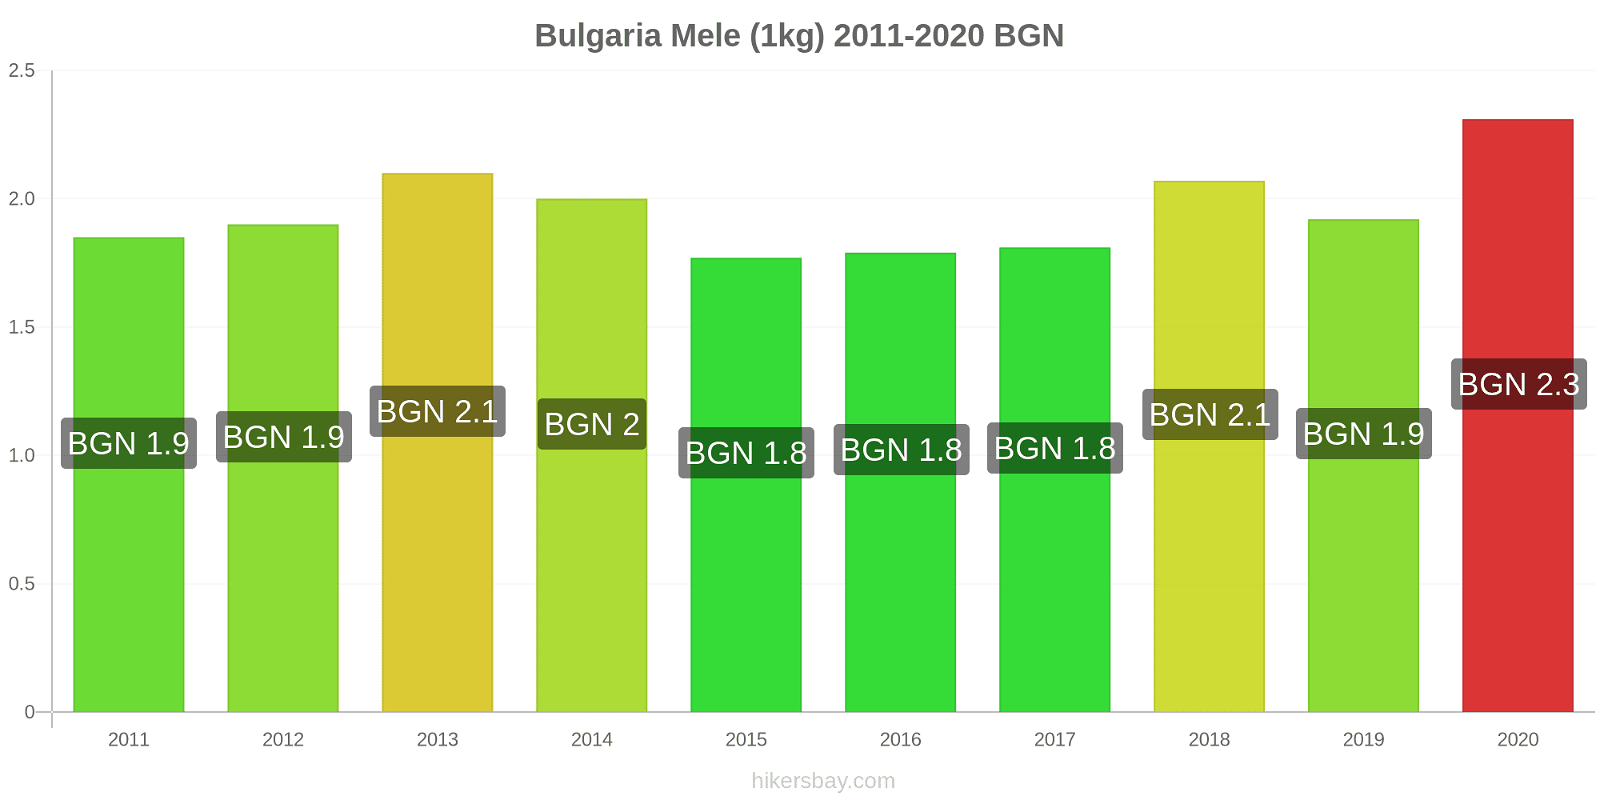 Bulgaria variazioni di prezzo Mele (1kg) hikersbay.com